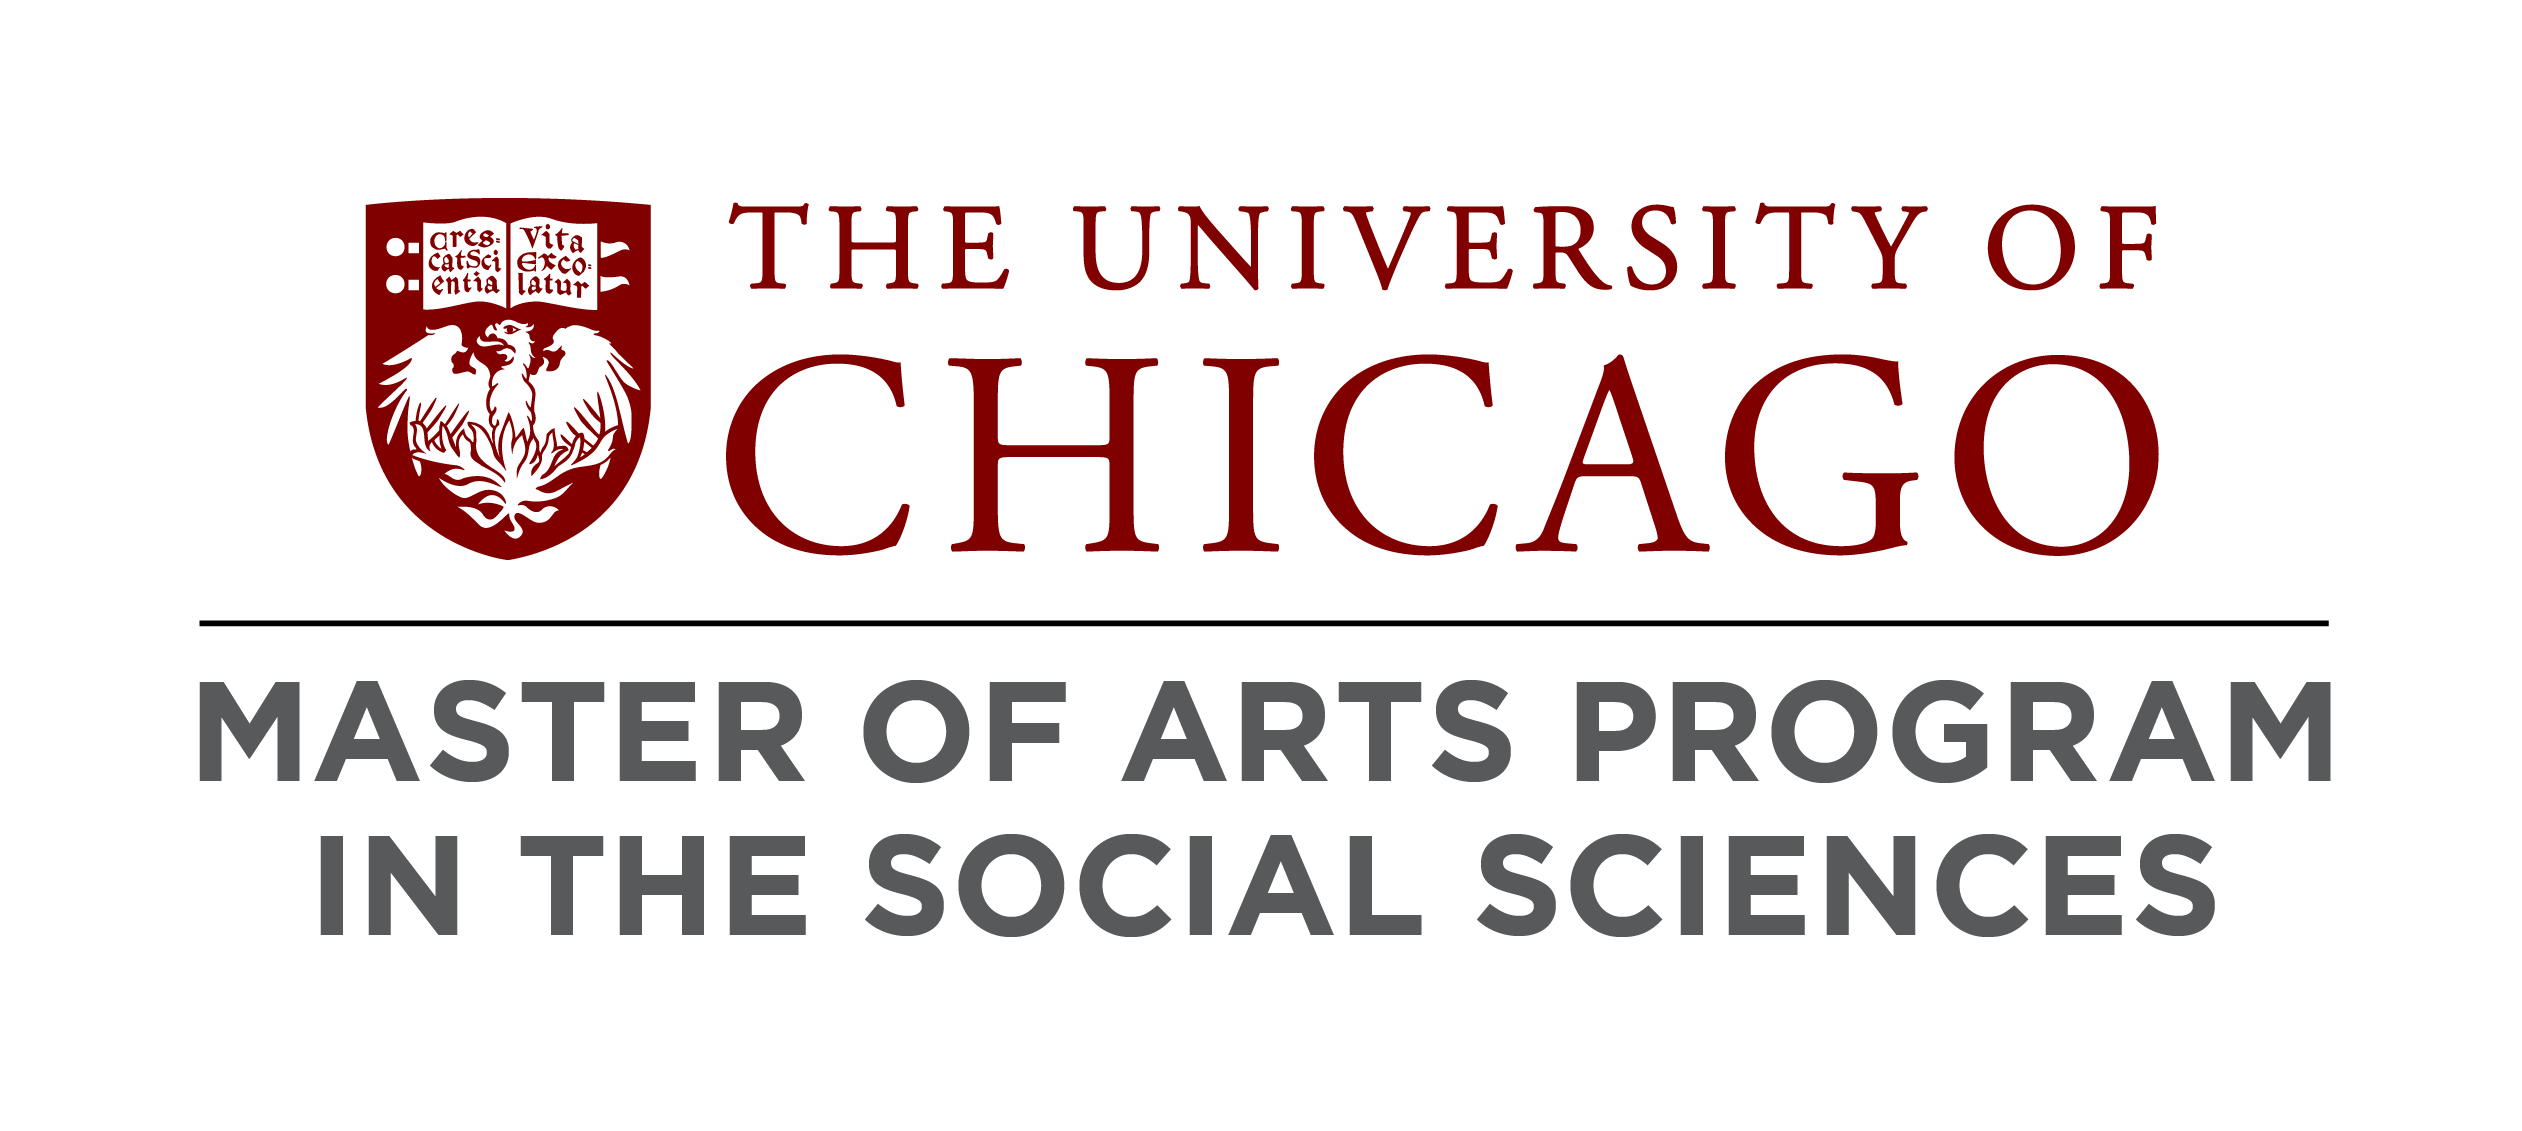 UC Master of Arts Program in the Social Sciences Logo